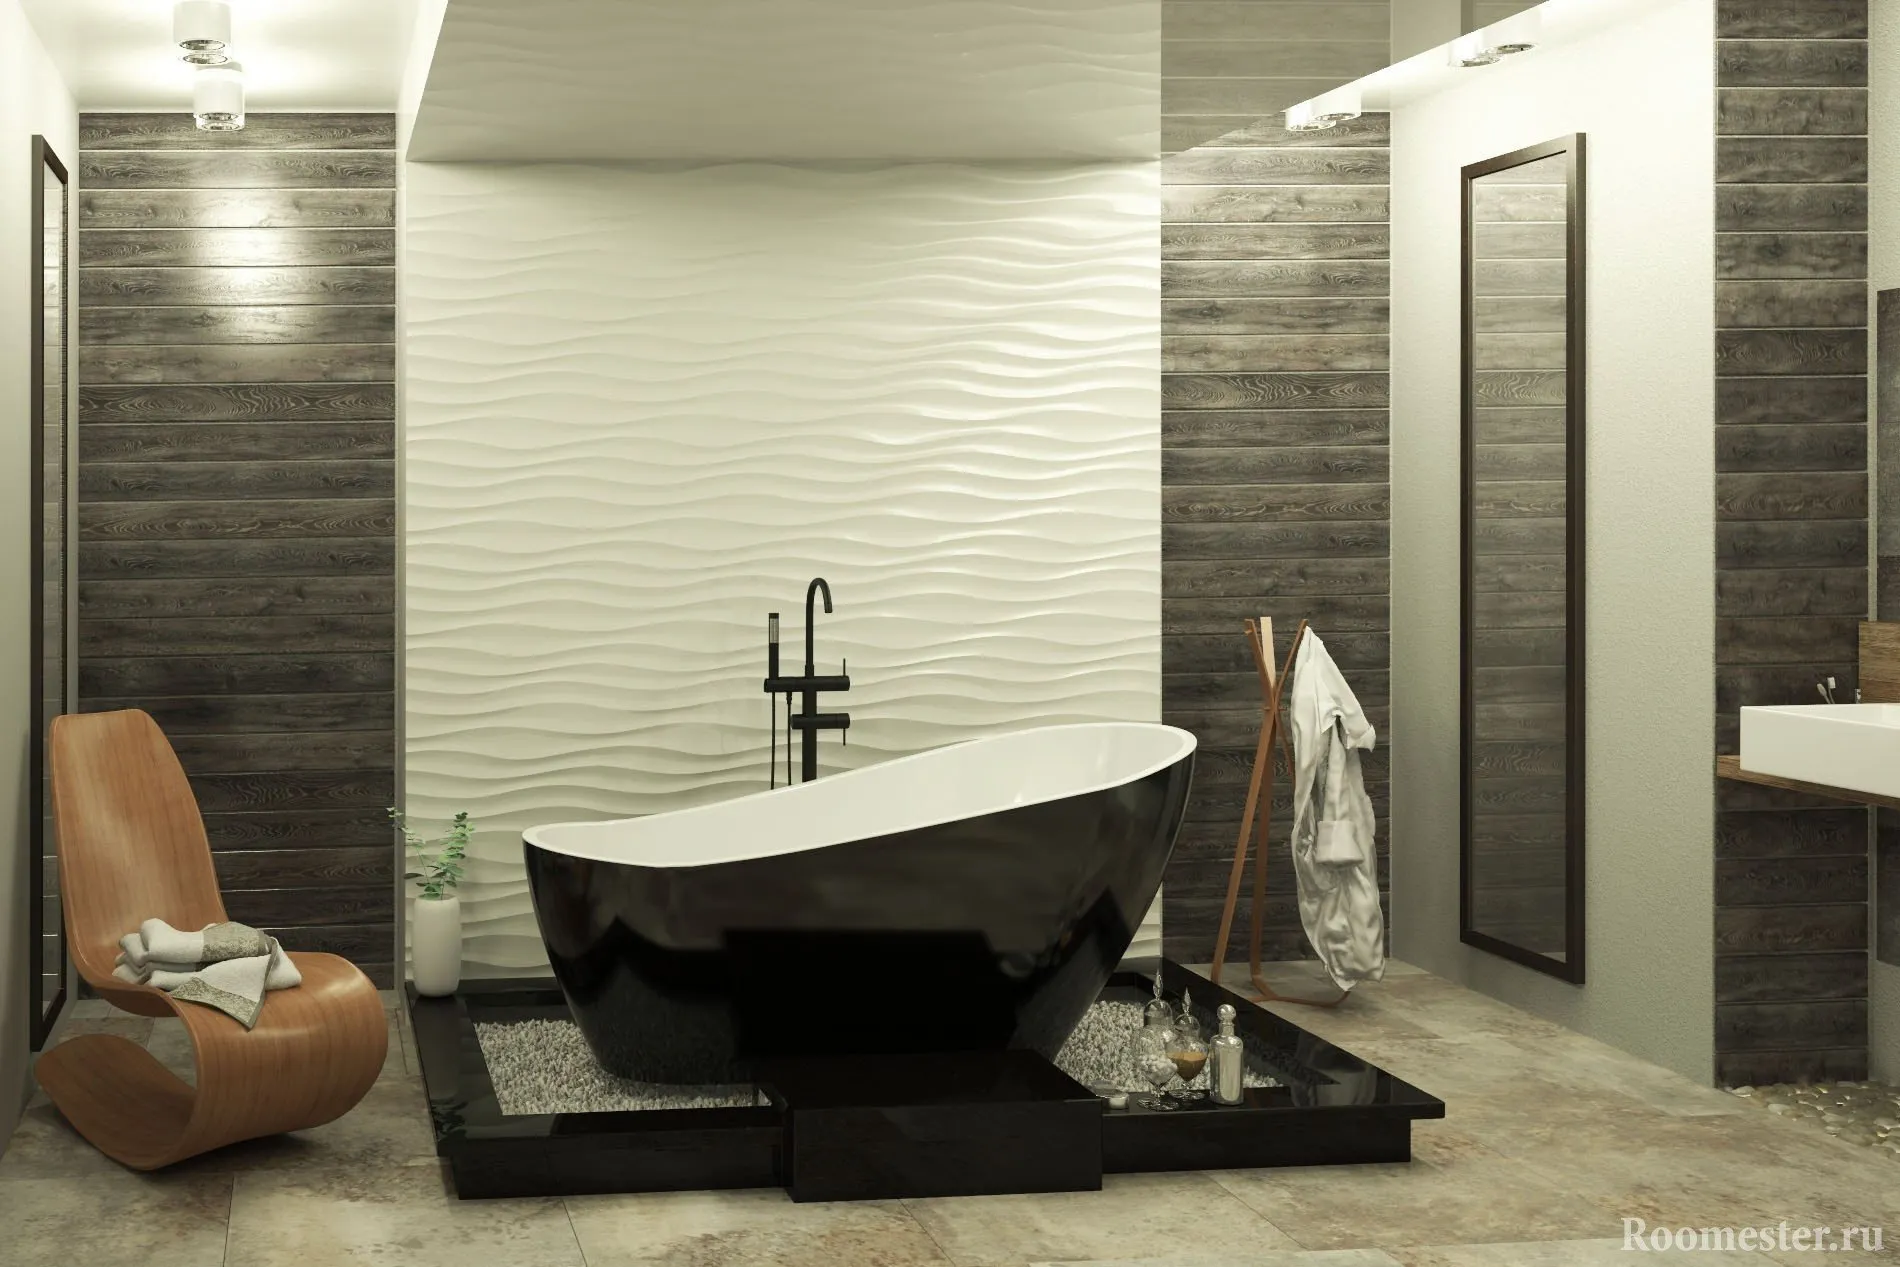 Ванная комната отделка стен панелями. Porcelanosa 3d плитка. Отделочные панели для ванной комнаты. Отделка стен в ванной комнате. Декоративные панели в ванную комнату.